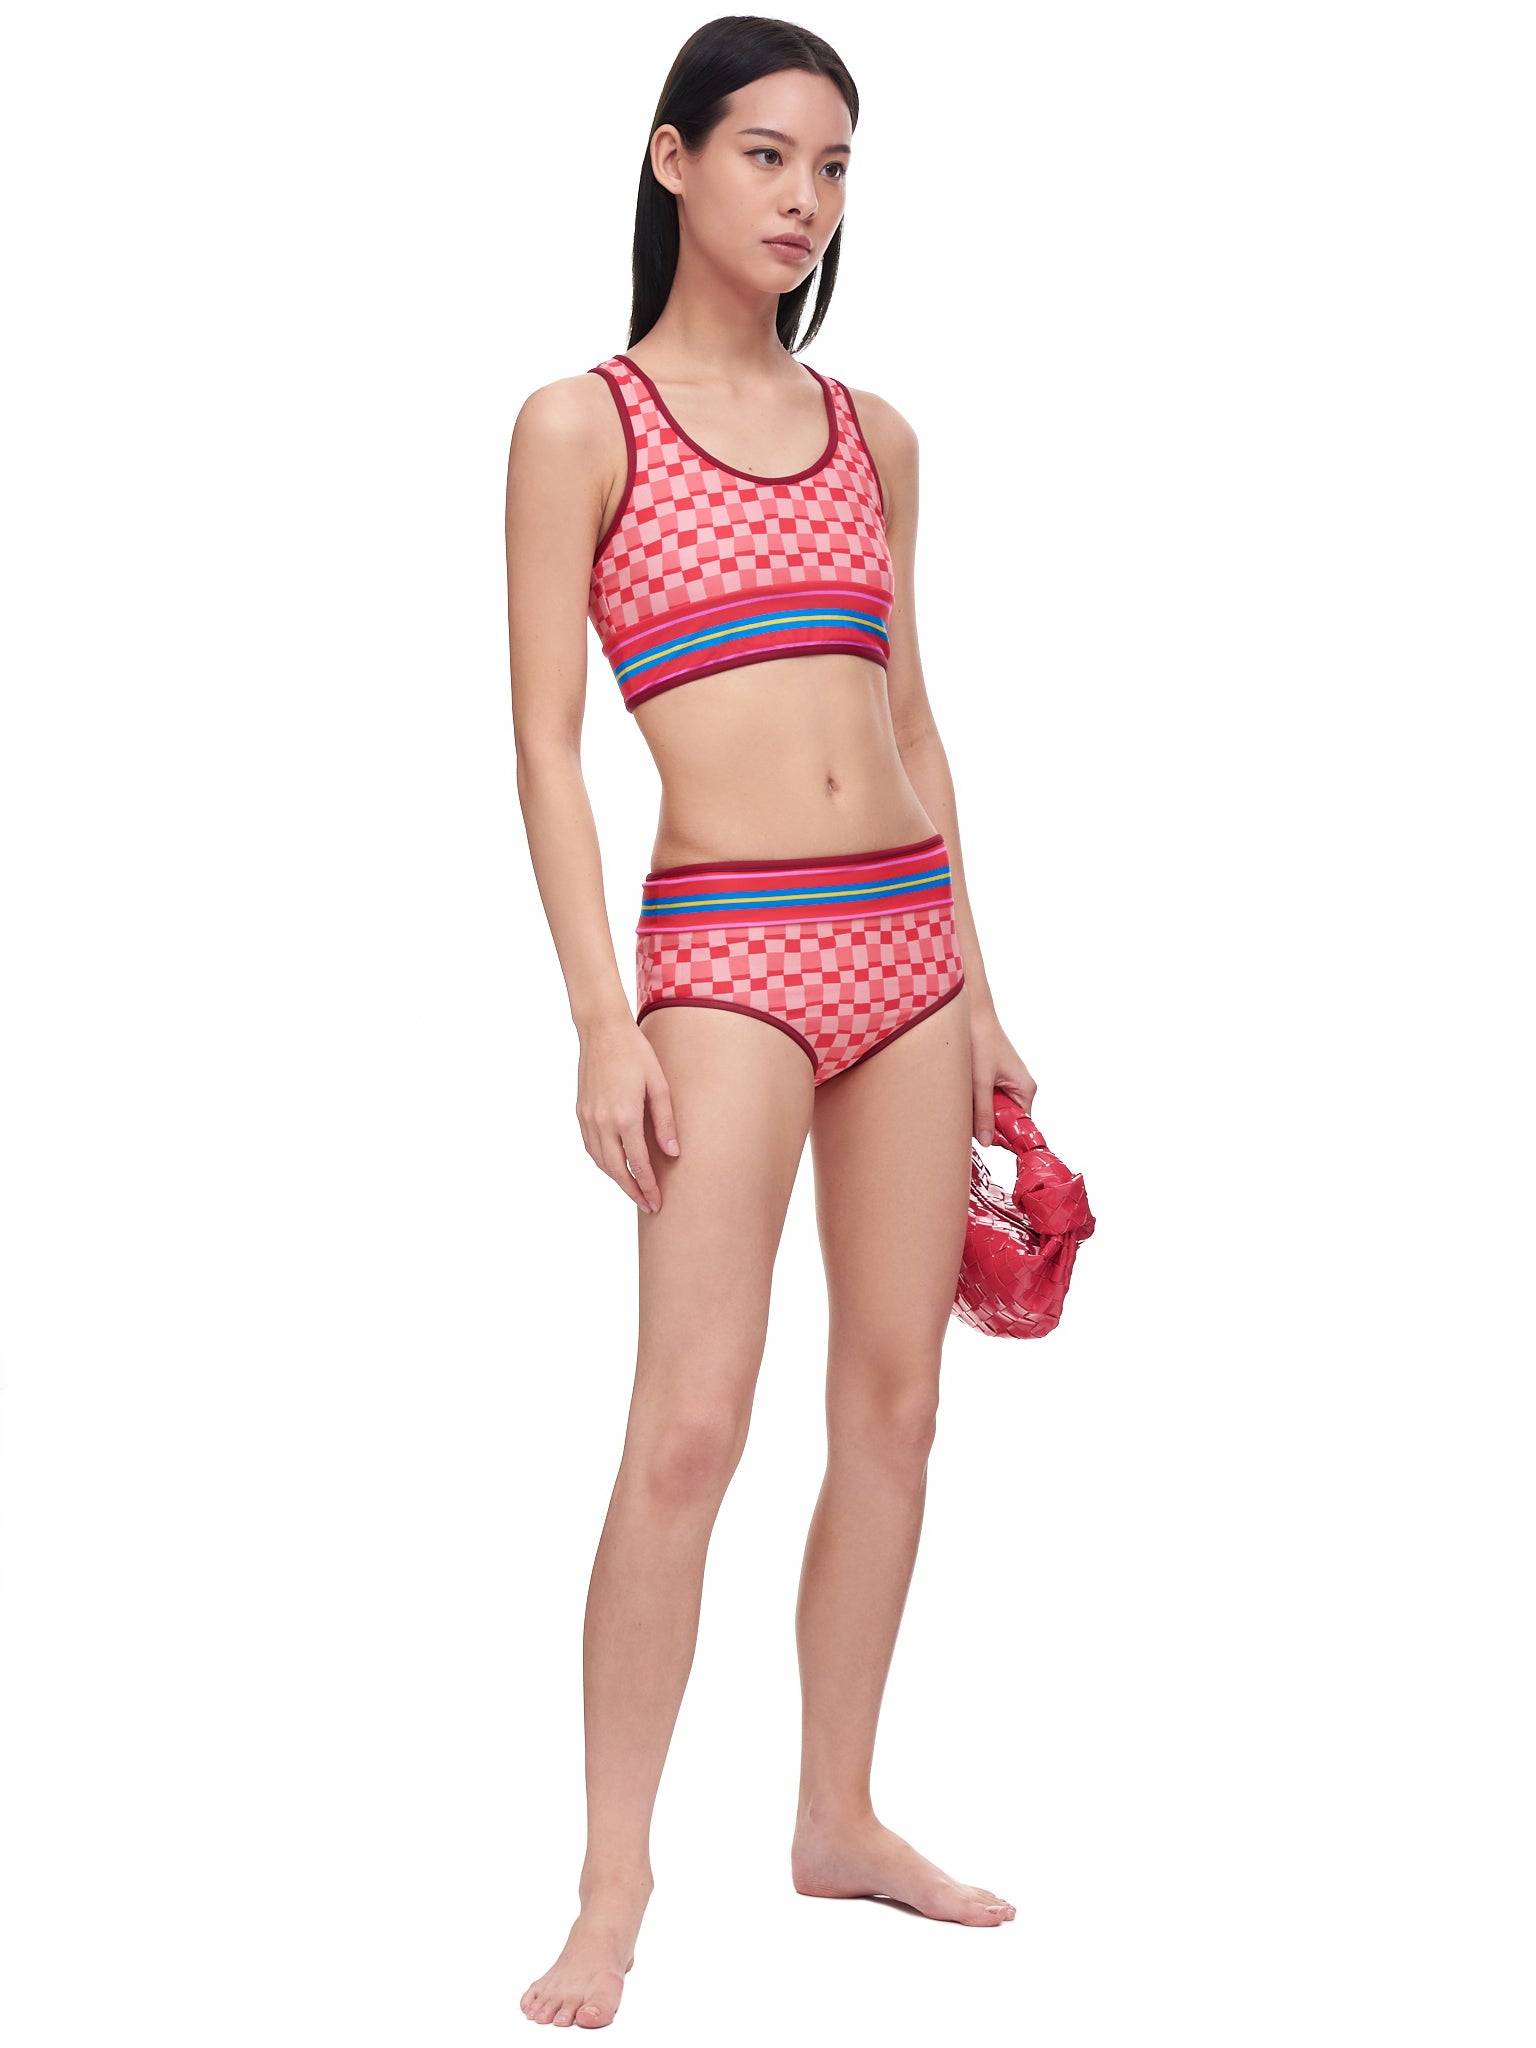 Marni Halter Top Bikini | H.Lorenzo - styled